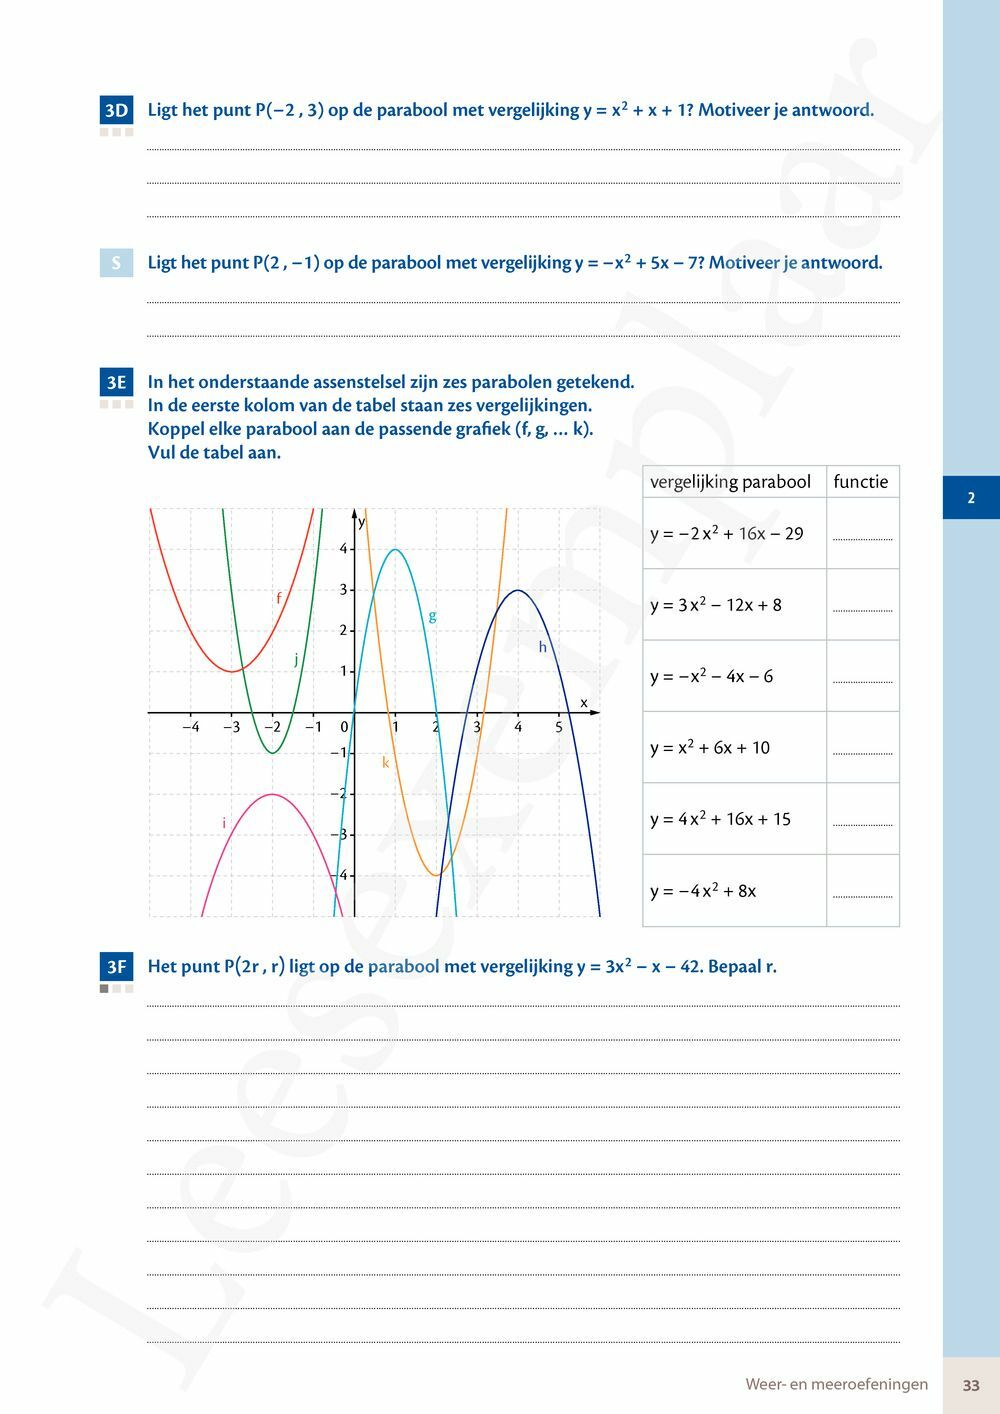 Preview: Matrix Wiskunde 5/6 Analyse, algebra Dubbele finaliteit Leerwerkboek (incl. Pelckmans Portaal)